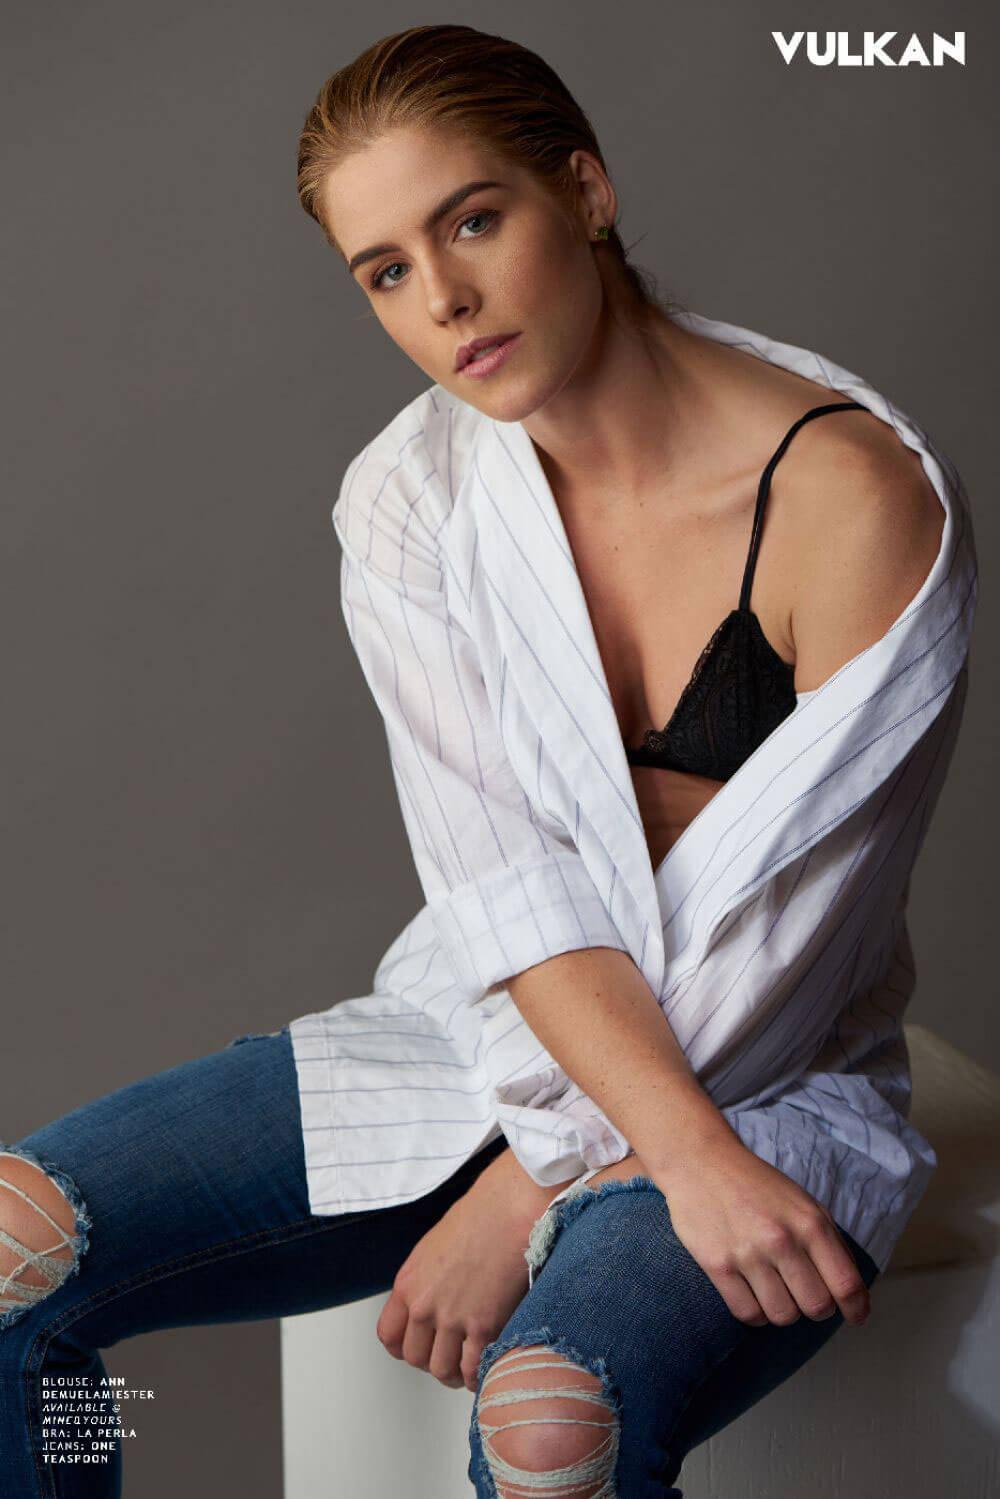 35 Hottest Emily Bett Rickards Bikini Pictures – Felicity Smoak Actress In Arrow | Best Of Comic Books